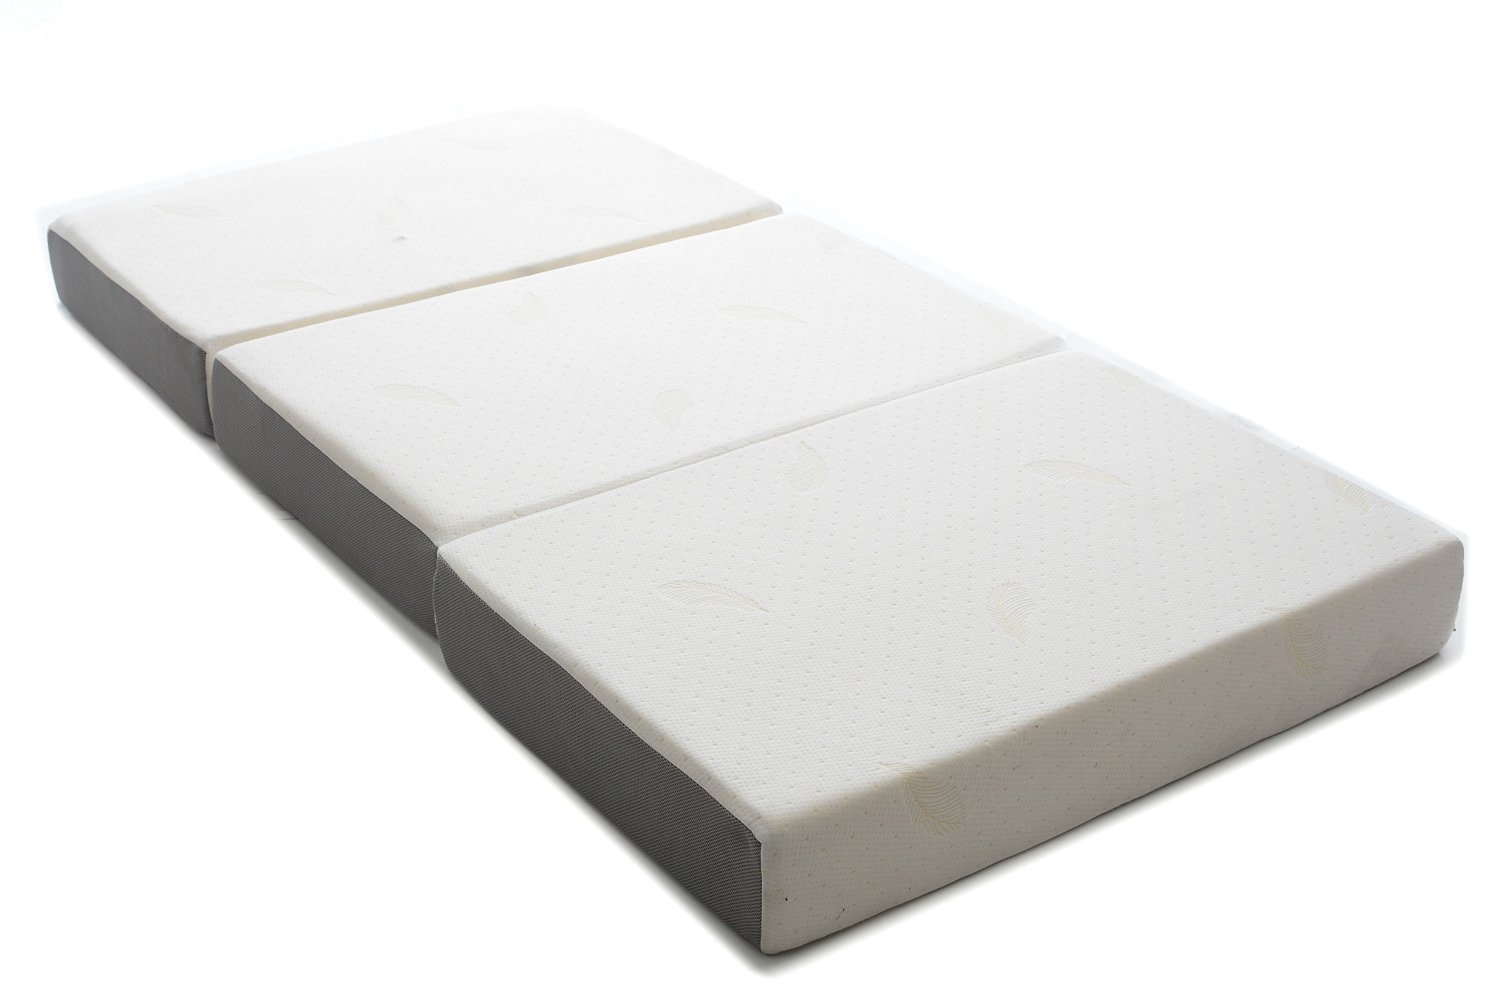 Milliard 6inch Memory Foam TriFold Mattress Review